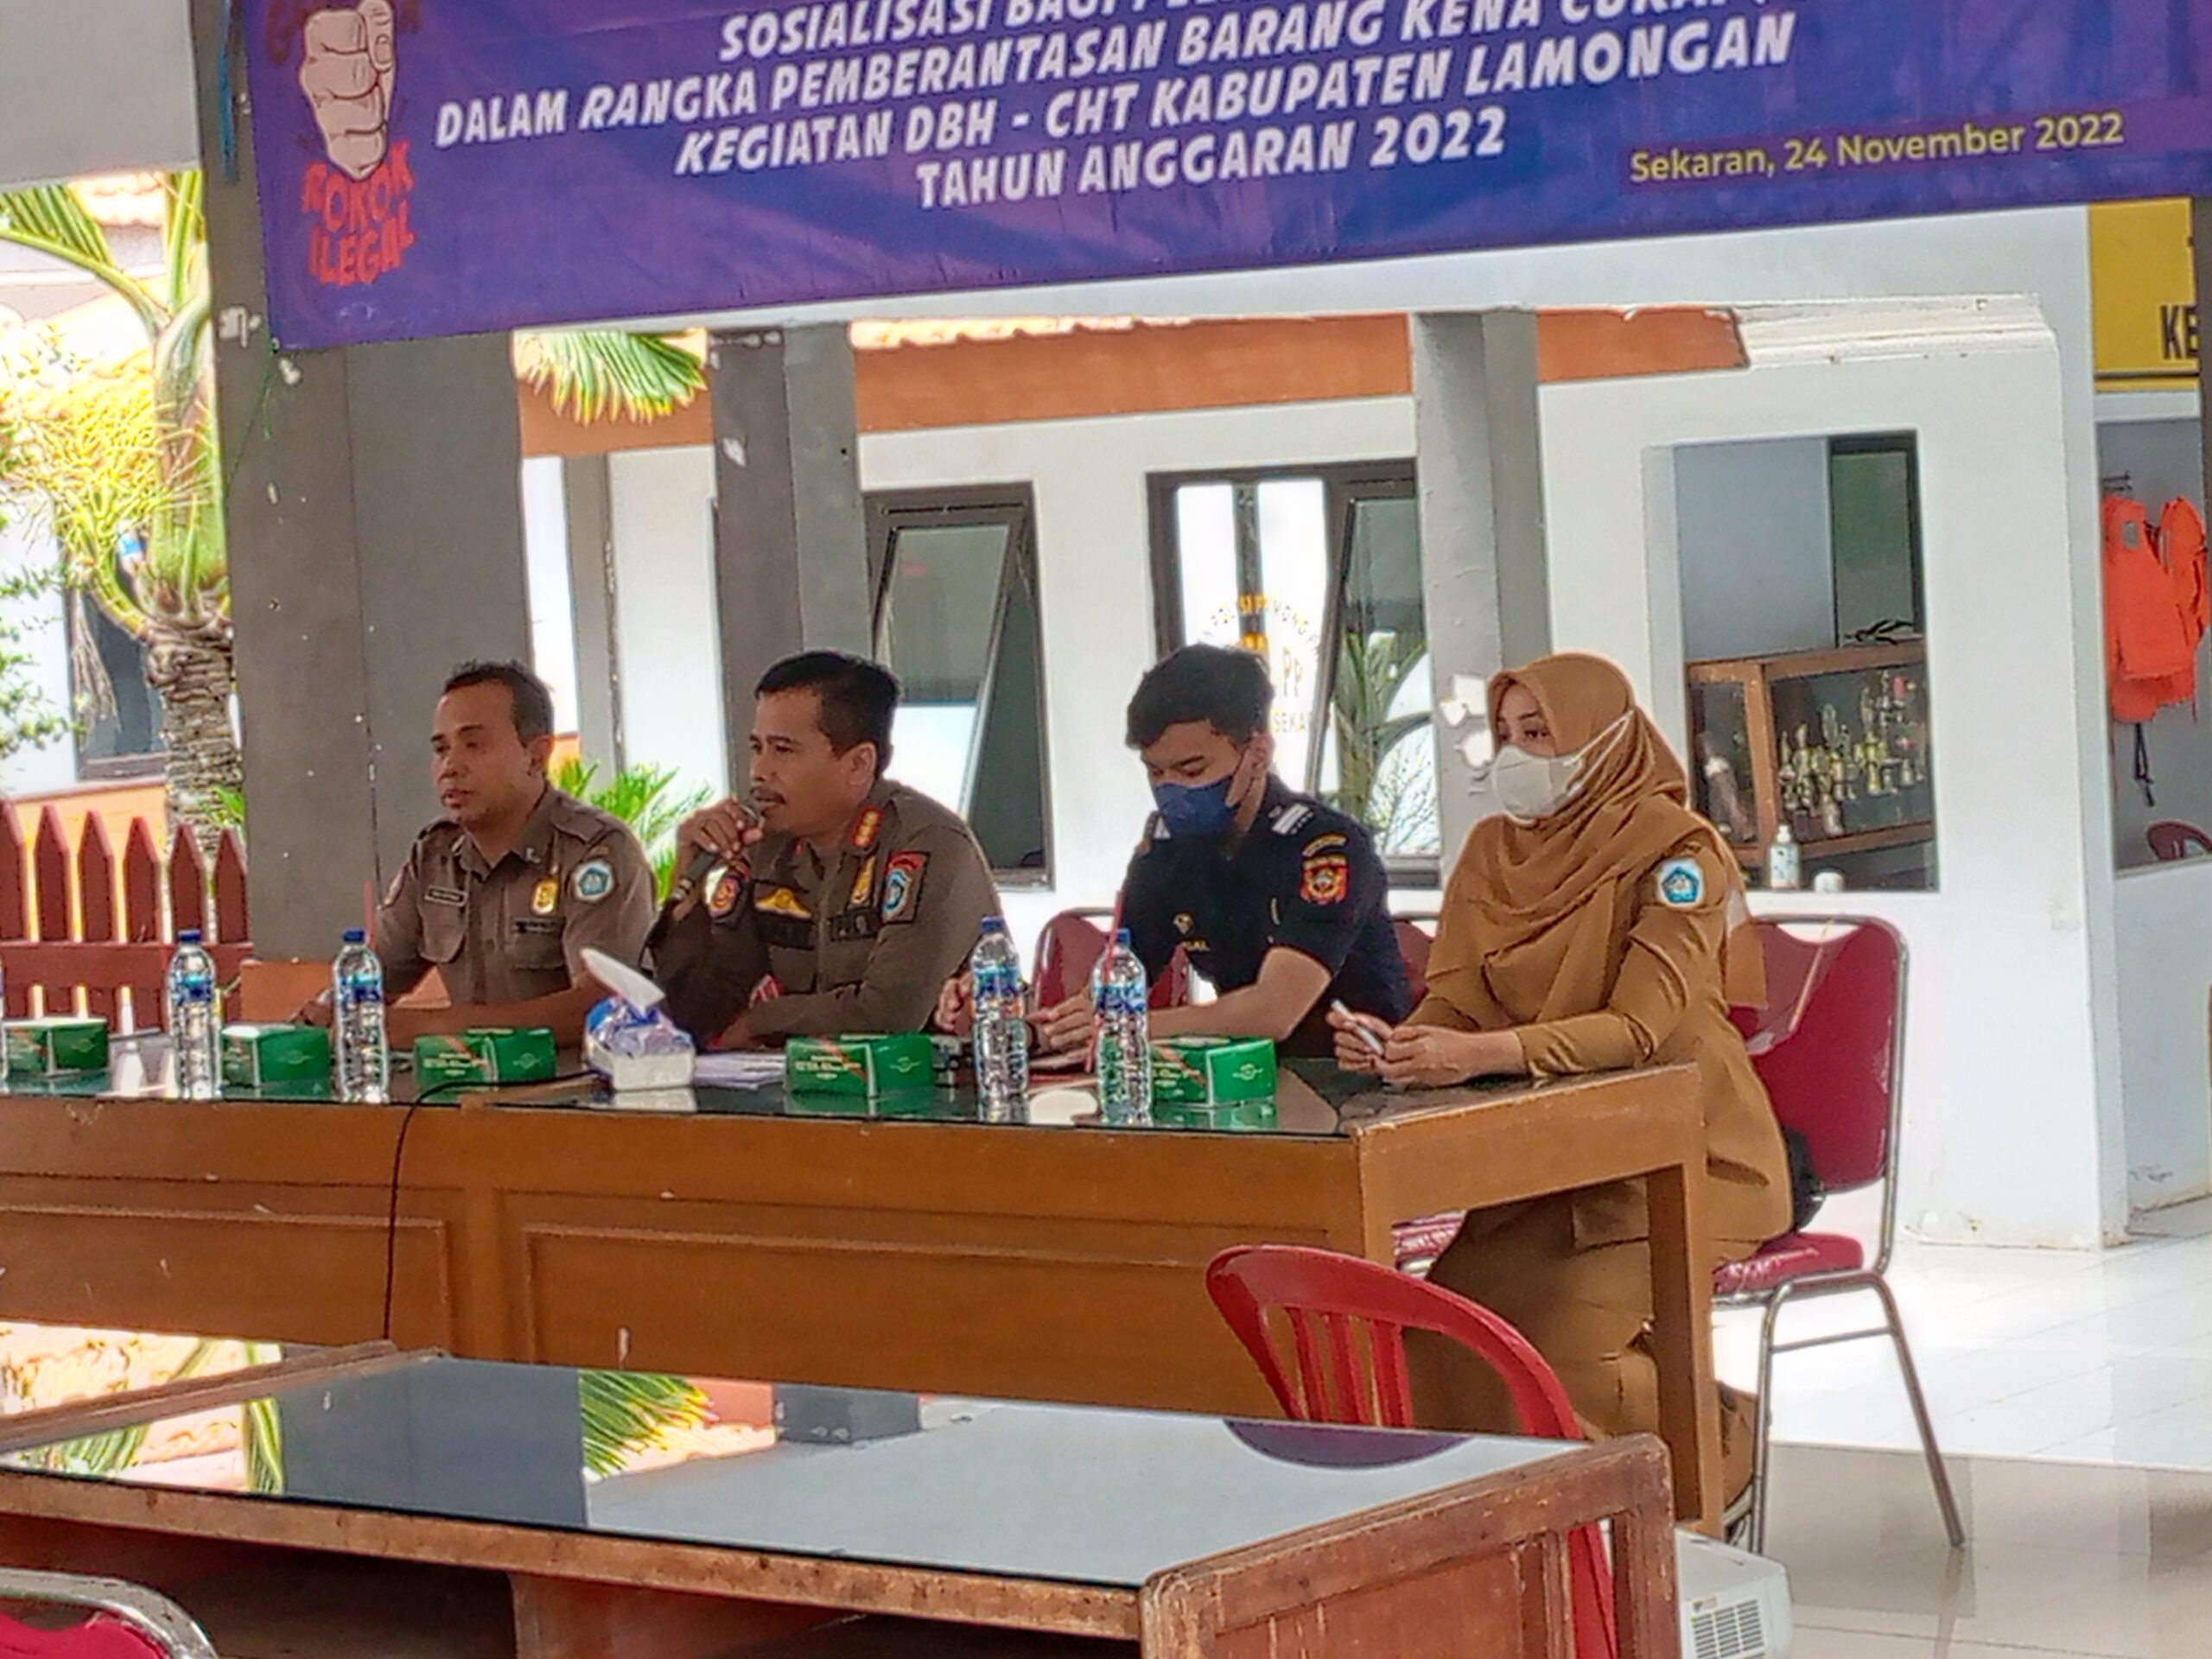 Sosialisasi Bagi Pelaku Usaha Rokok Dalam Rangka Kegiatan DBH- CHT Kabupaten Lamongan tahun 2022